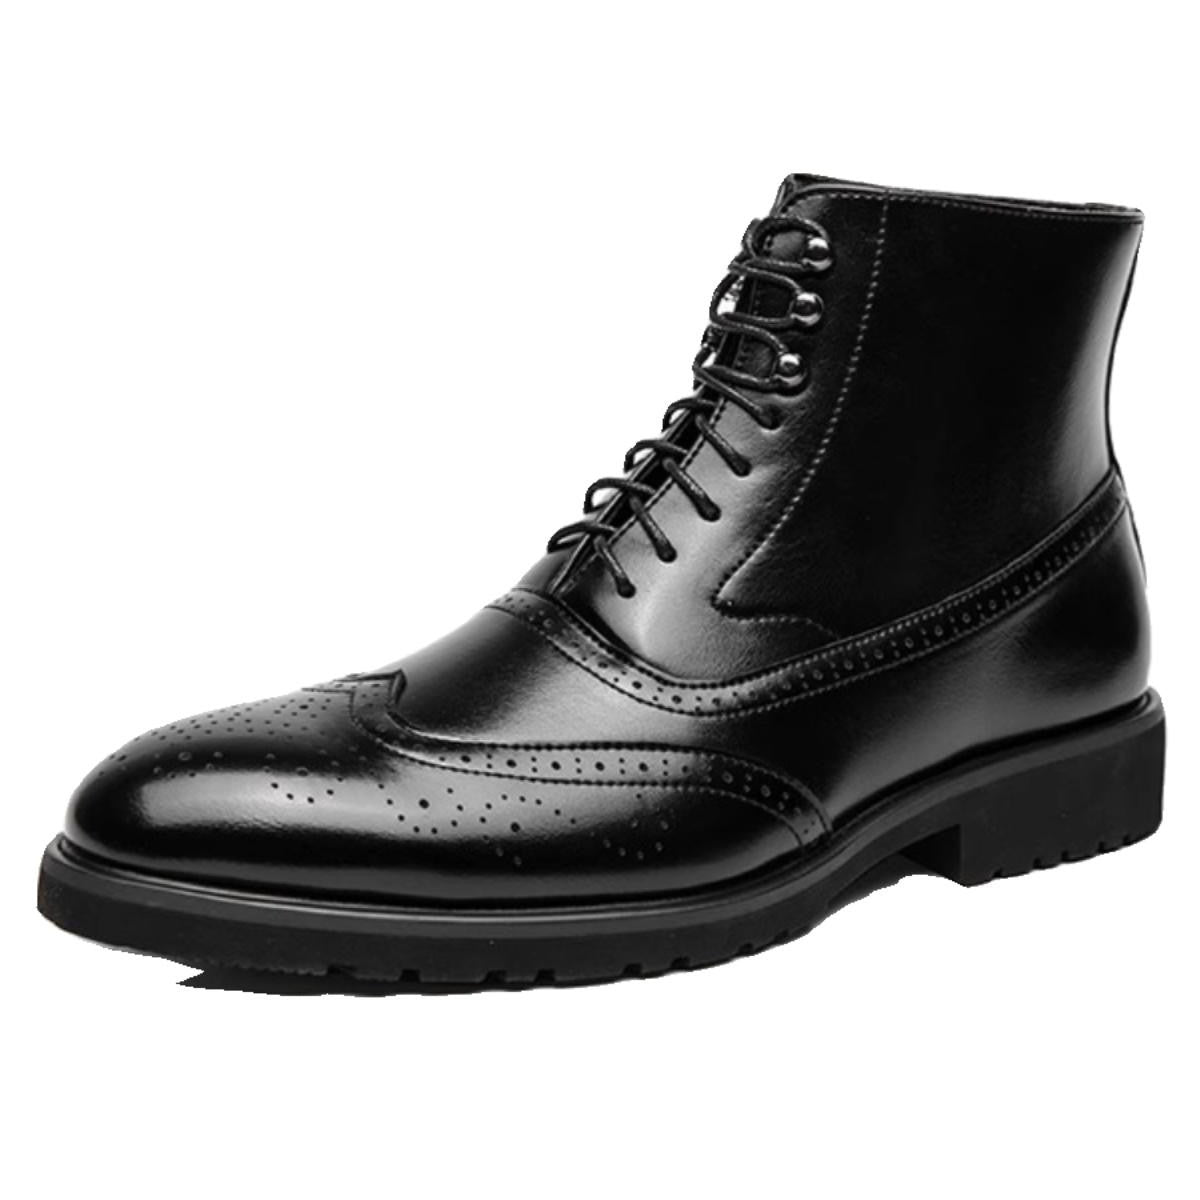 Stylish Black Leather Wingtip Boots